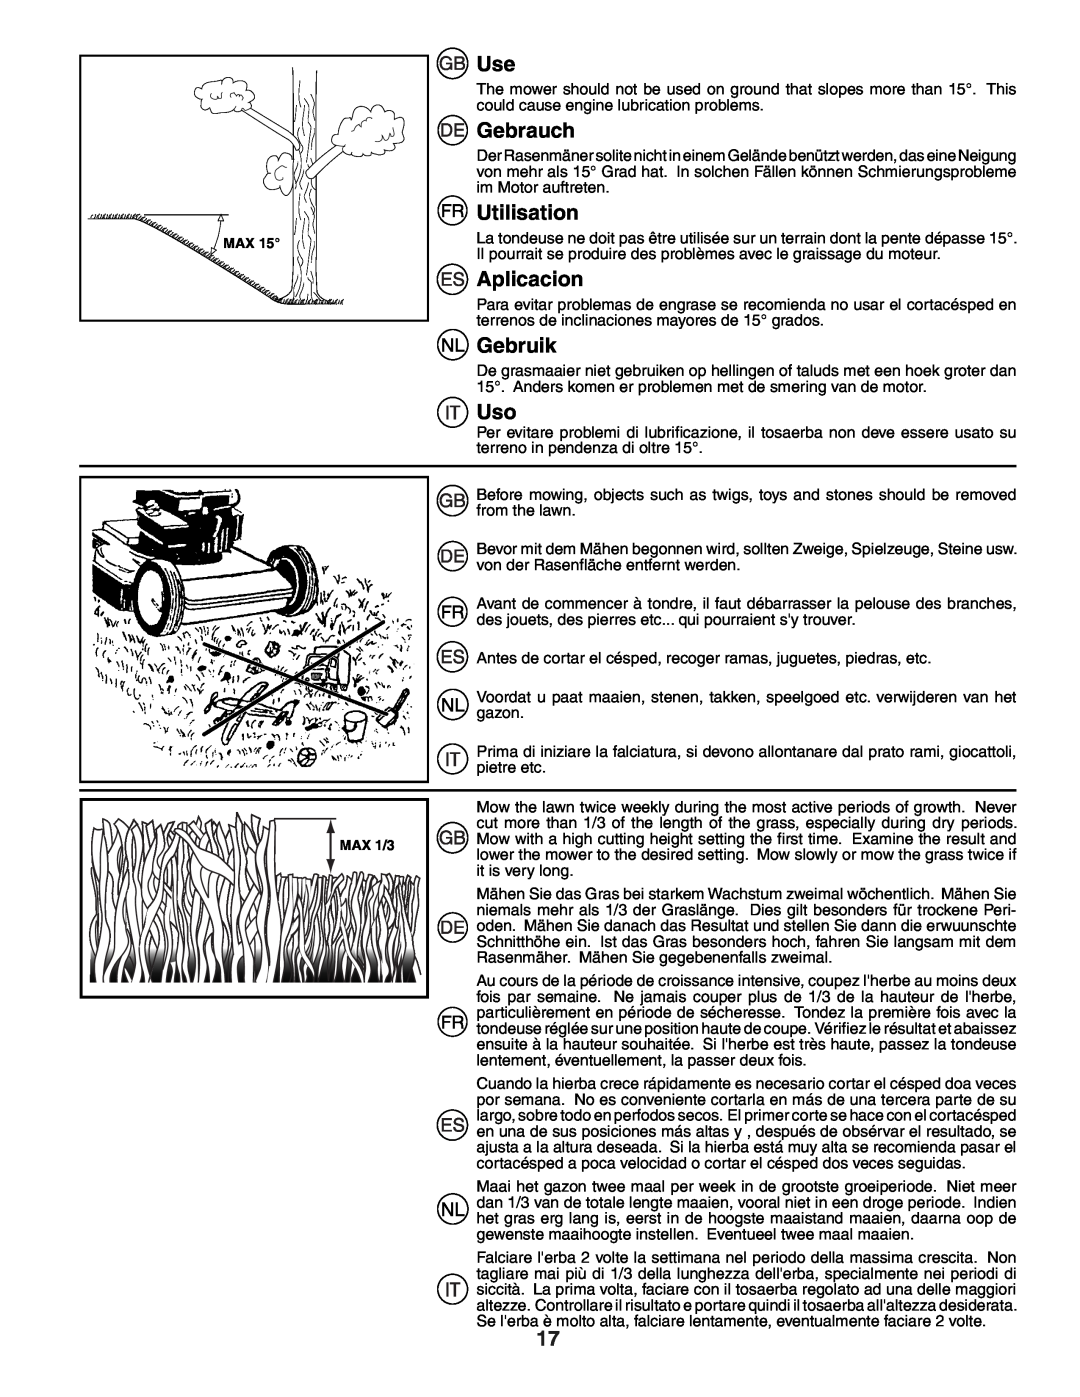 Husqvarna R53W instruction manual Gebrauch, Utilisation, Aplicacion, Gebruik 